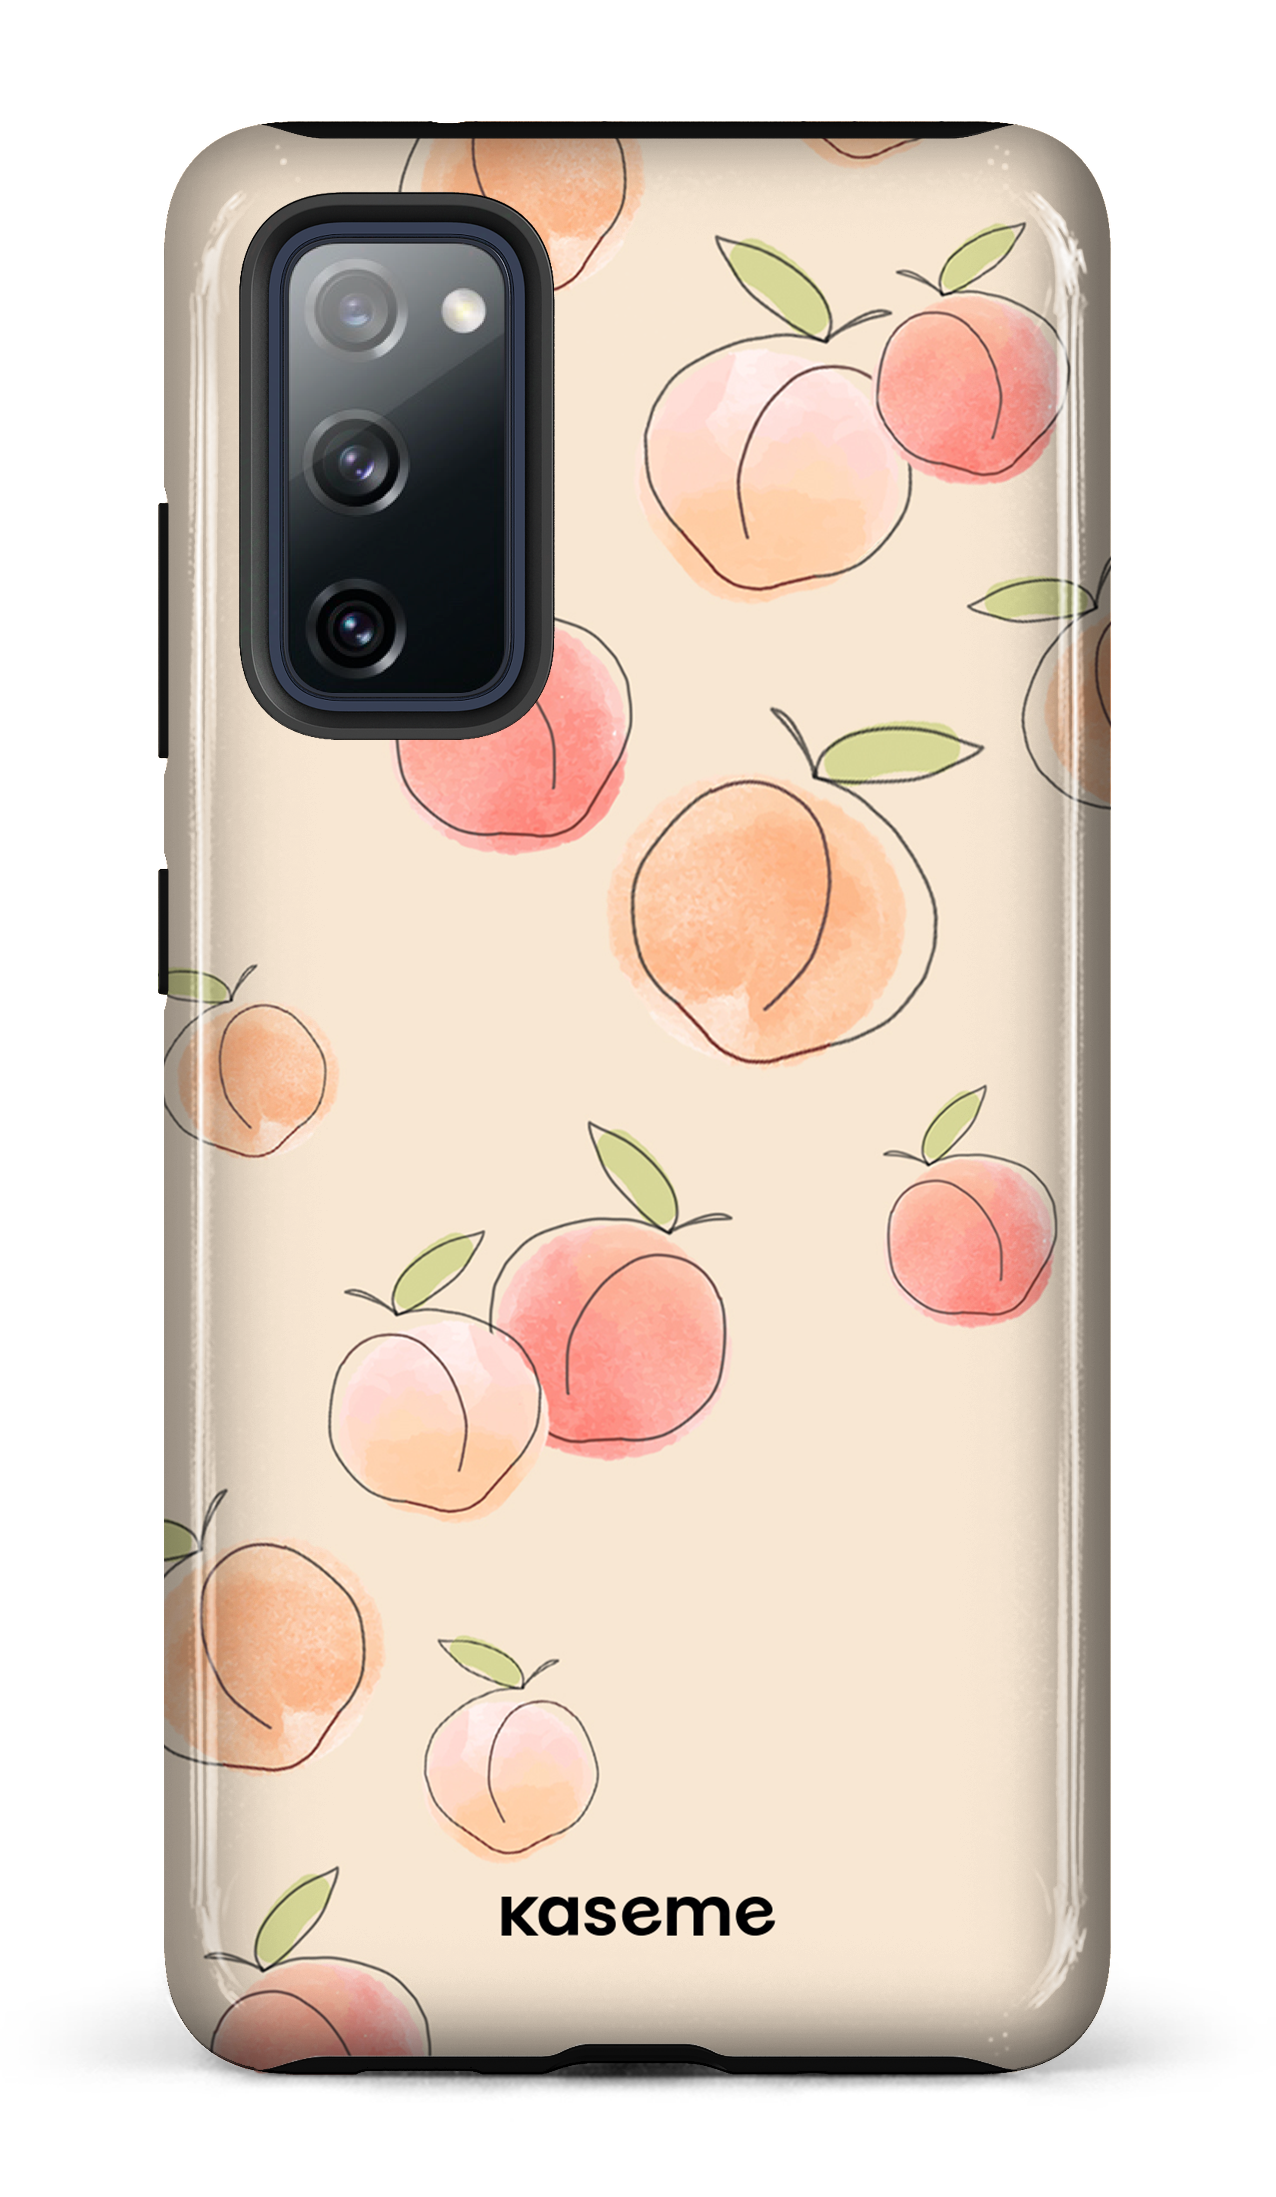 Peachy - Galaxy S20 FE